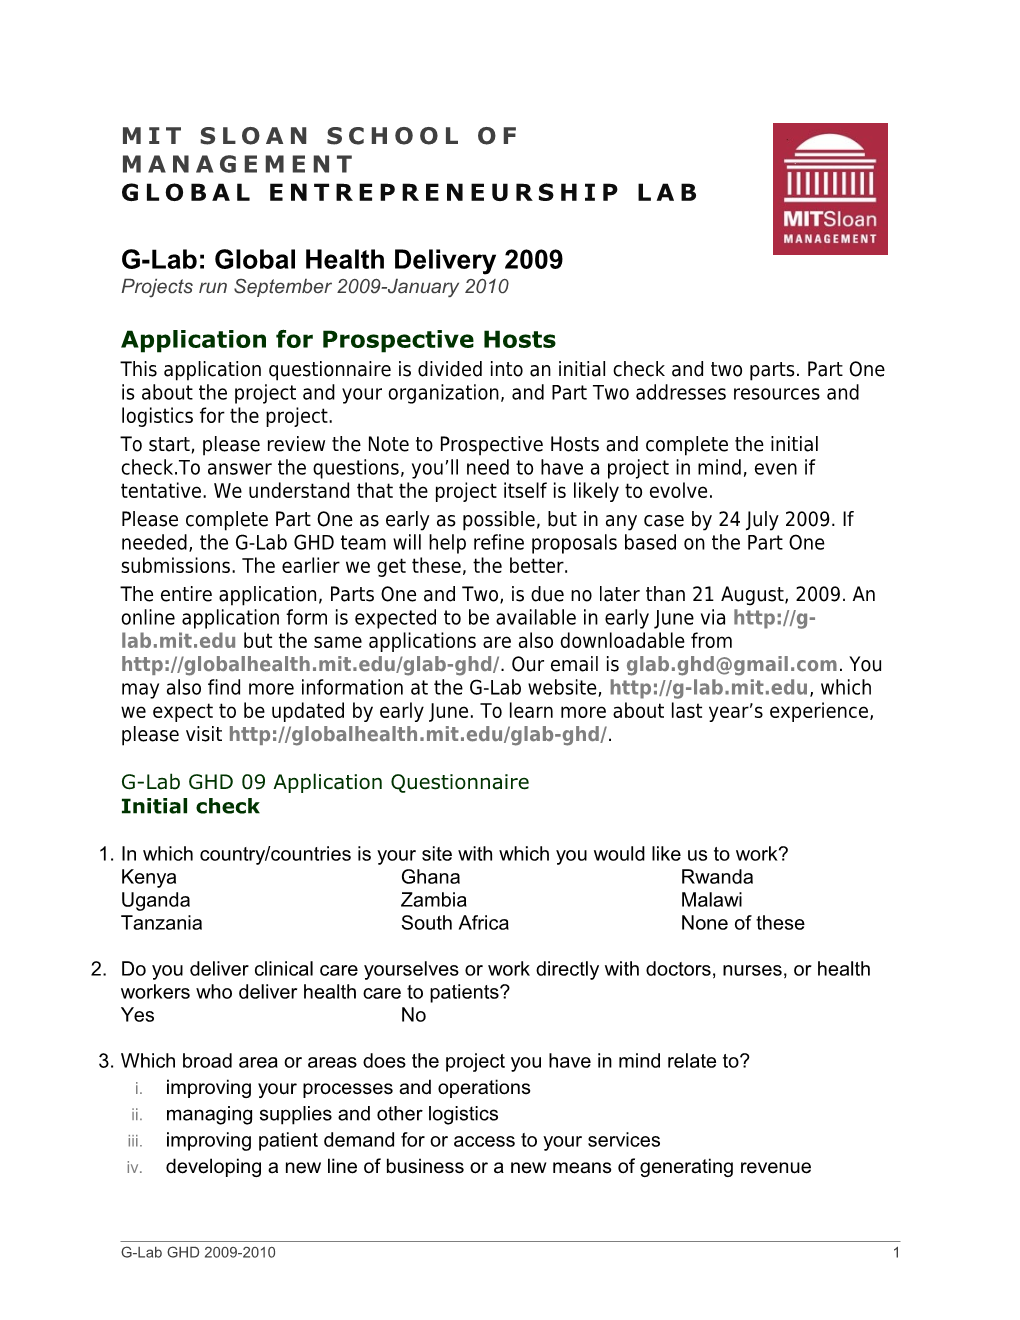 Questionnaire for Prospective MIT Global E-Lab Companies